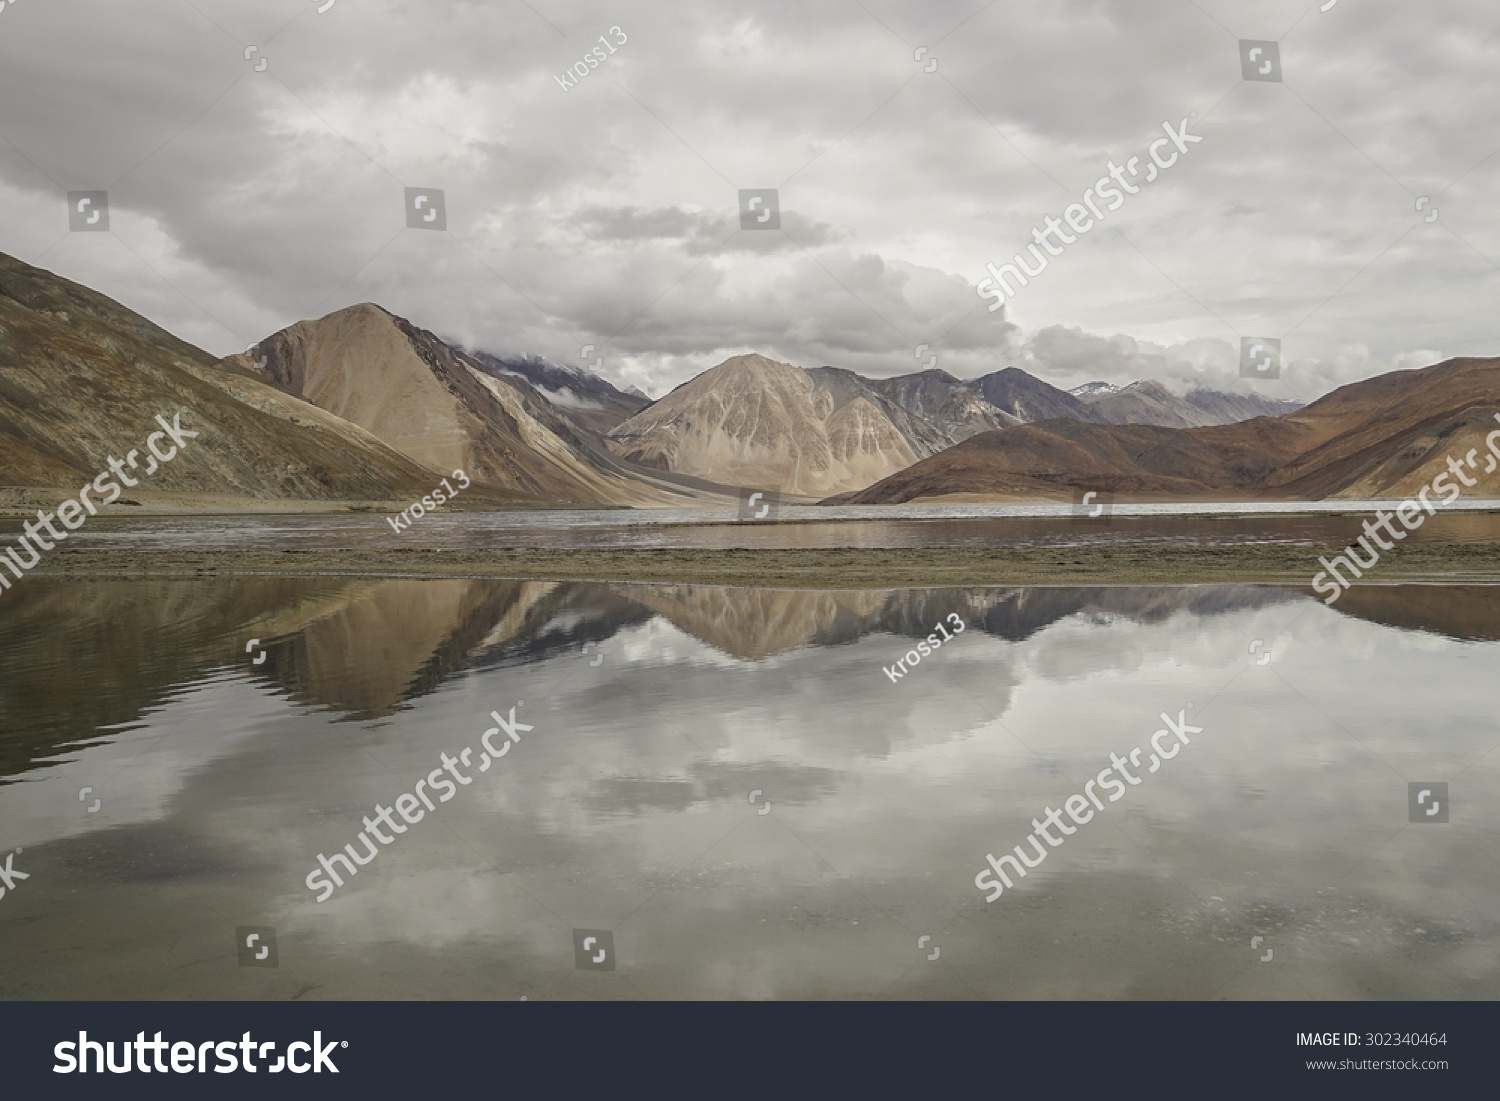 A reflecting view of Pangong Lake, Ladakh, India. #302340464